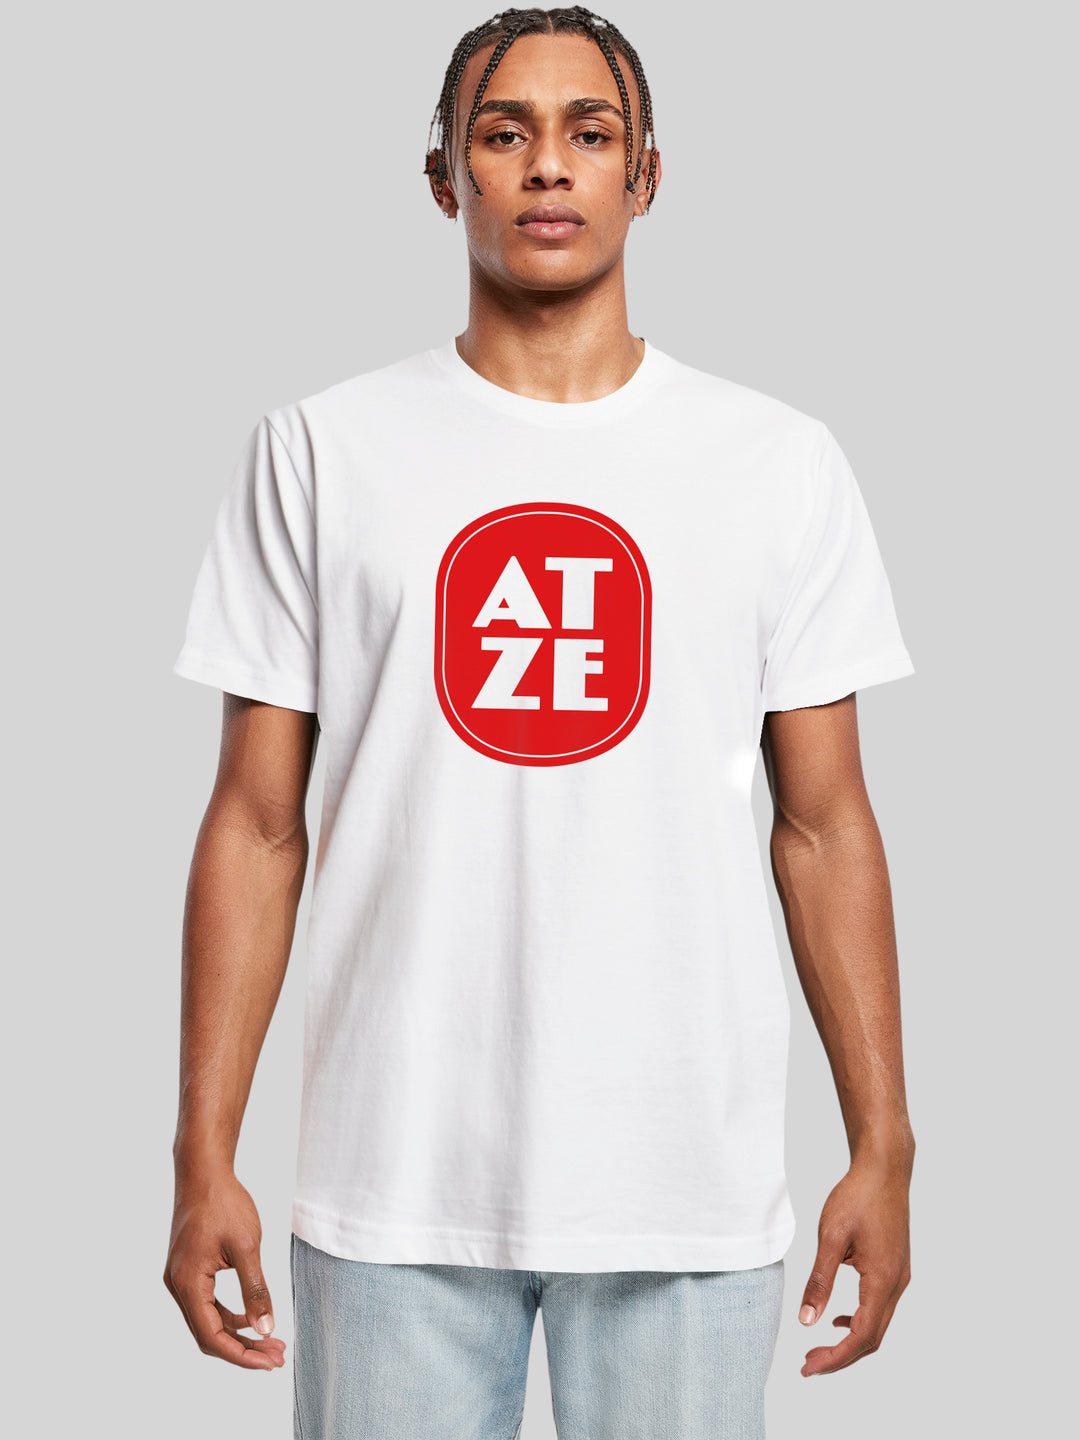 Logo Atze Logo with T-Shirt Round Neck